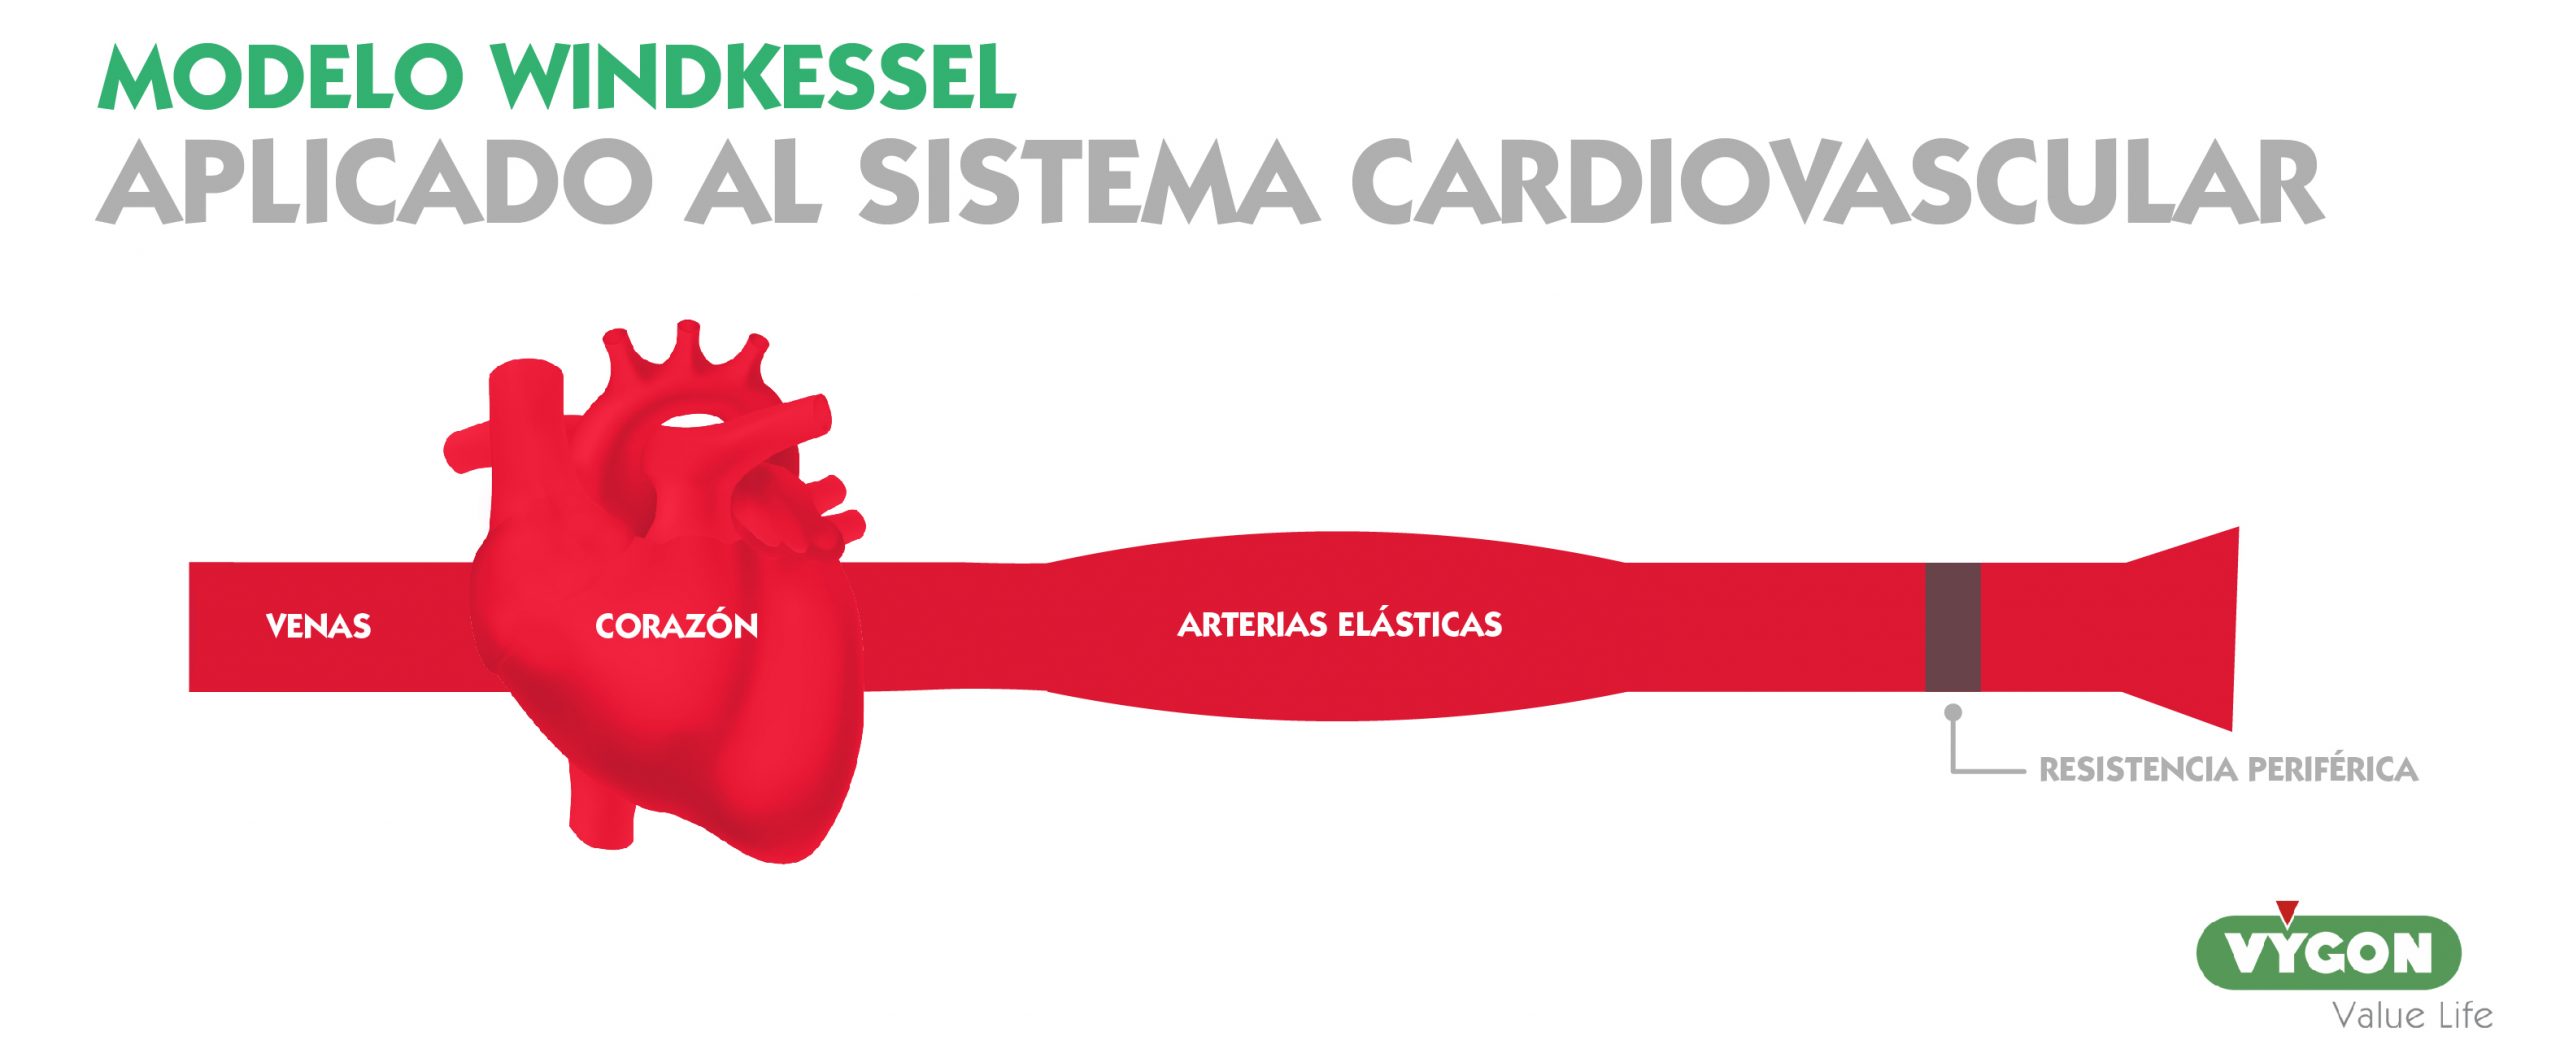 Modelo Windkessel aplicado al sistema cardiovascular